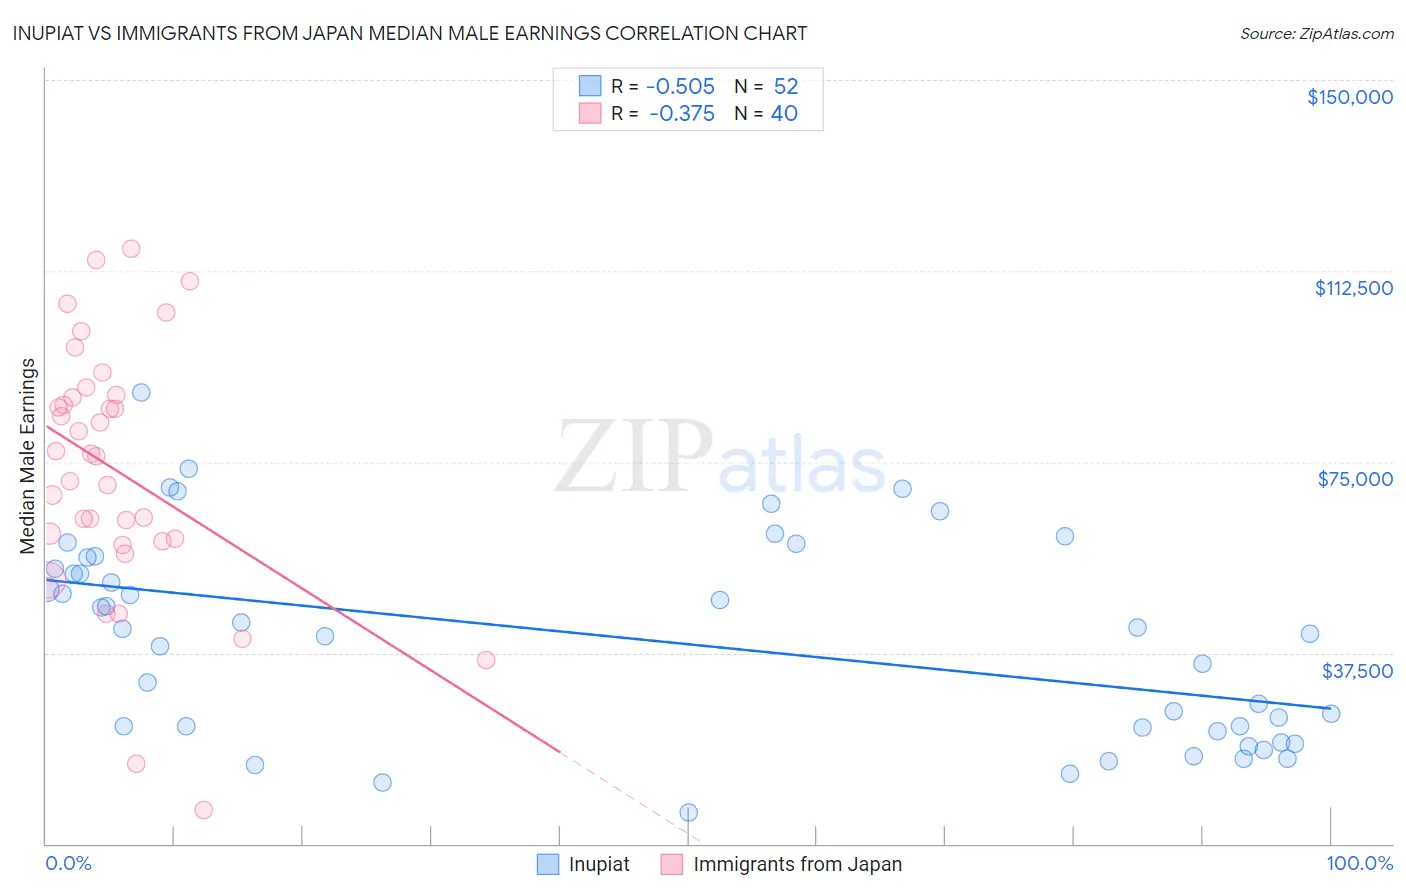 Inupiat vs Immigrants from Japan Median Male Earnings